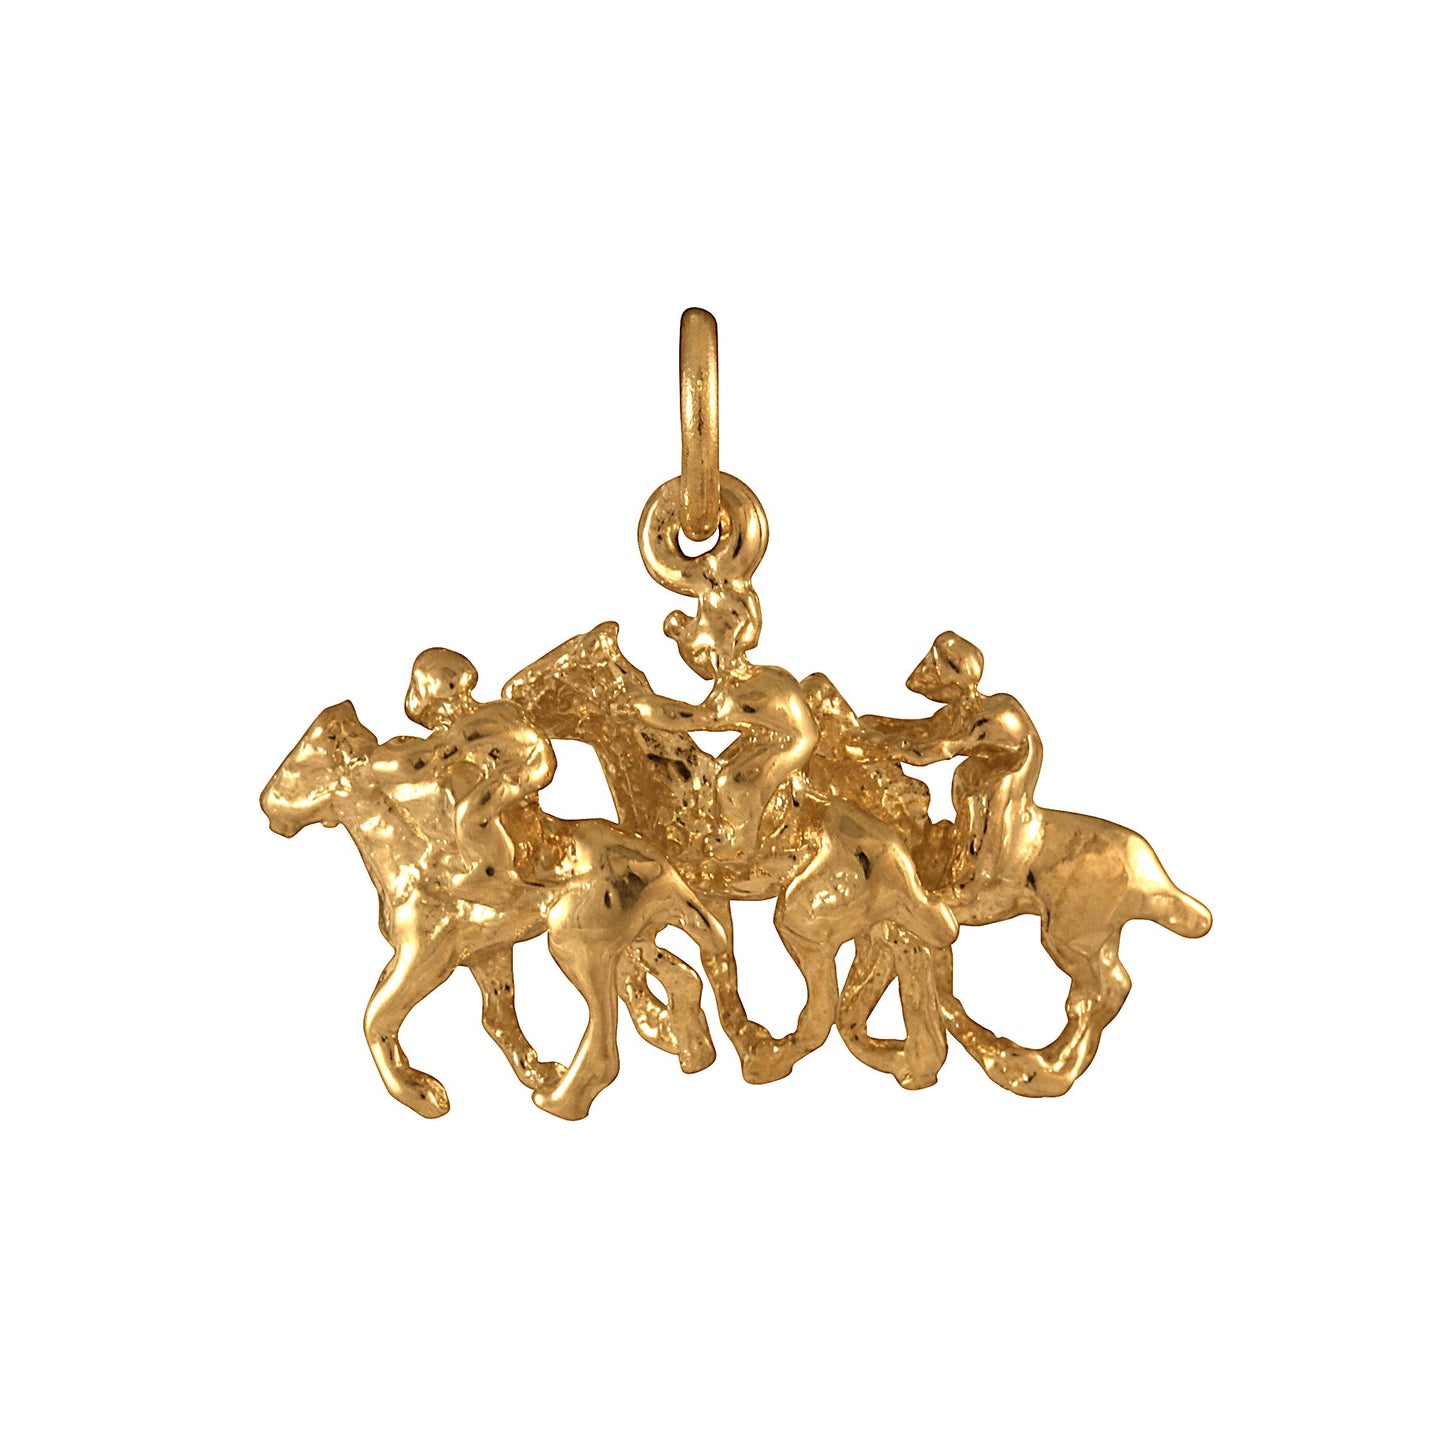 9ct Gold Racing Horses Charm